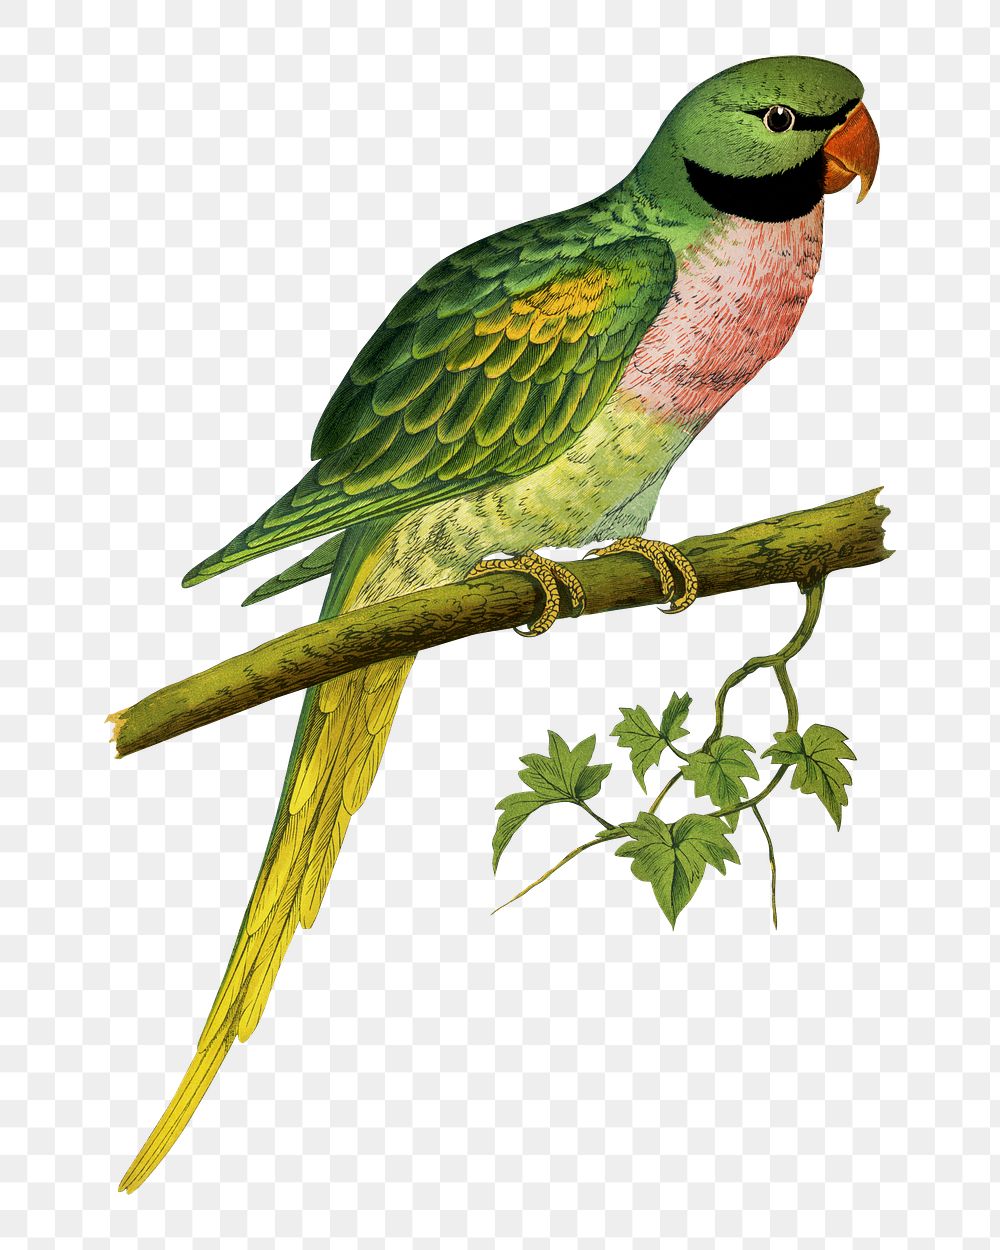 Vintage bird png javan parakeet, transparent background. Remixed by rawpixel.